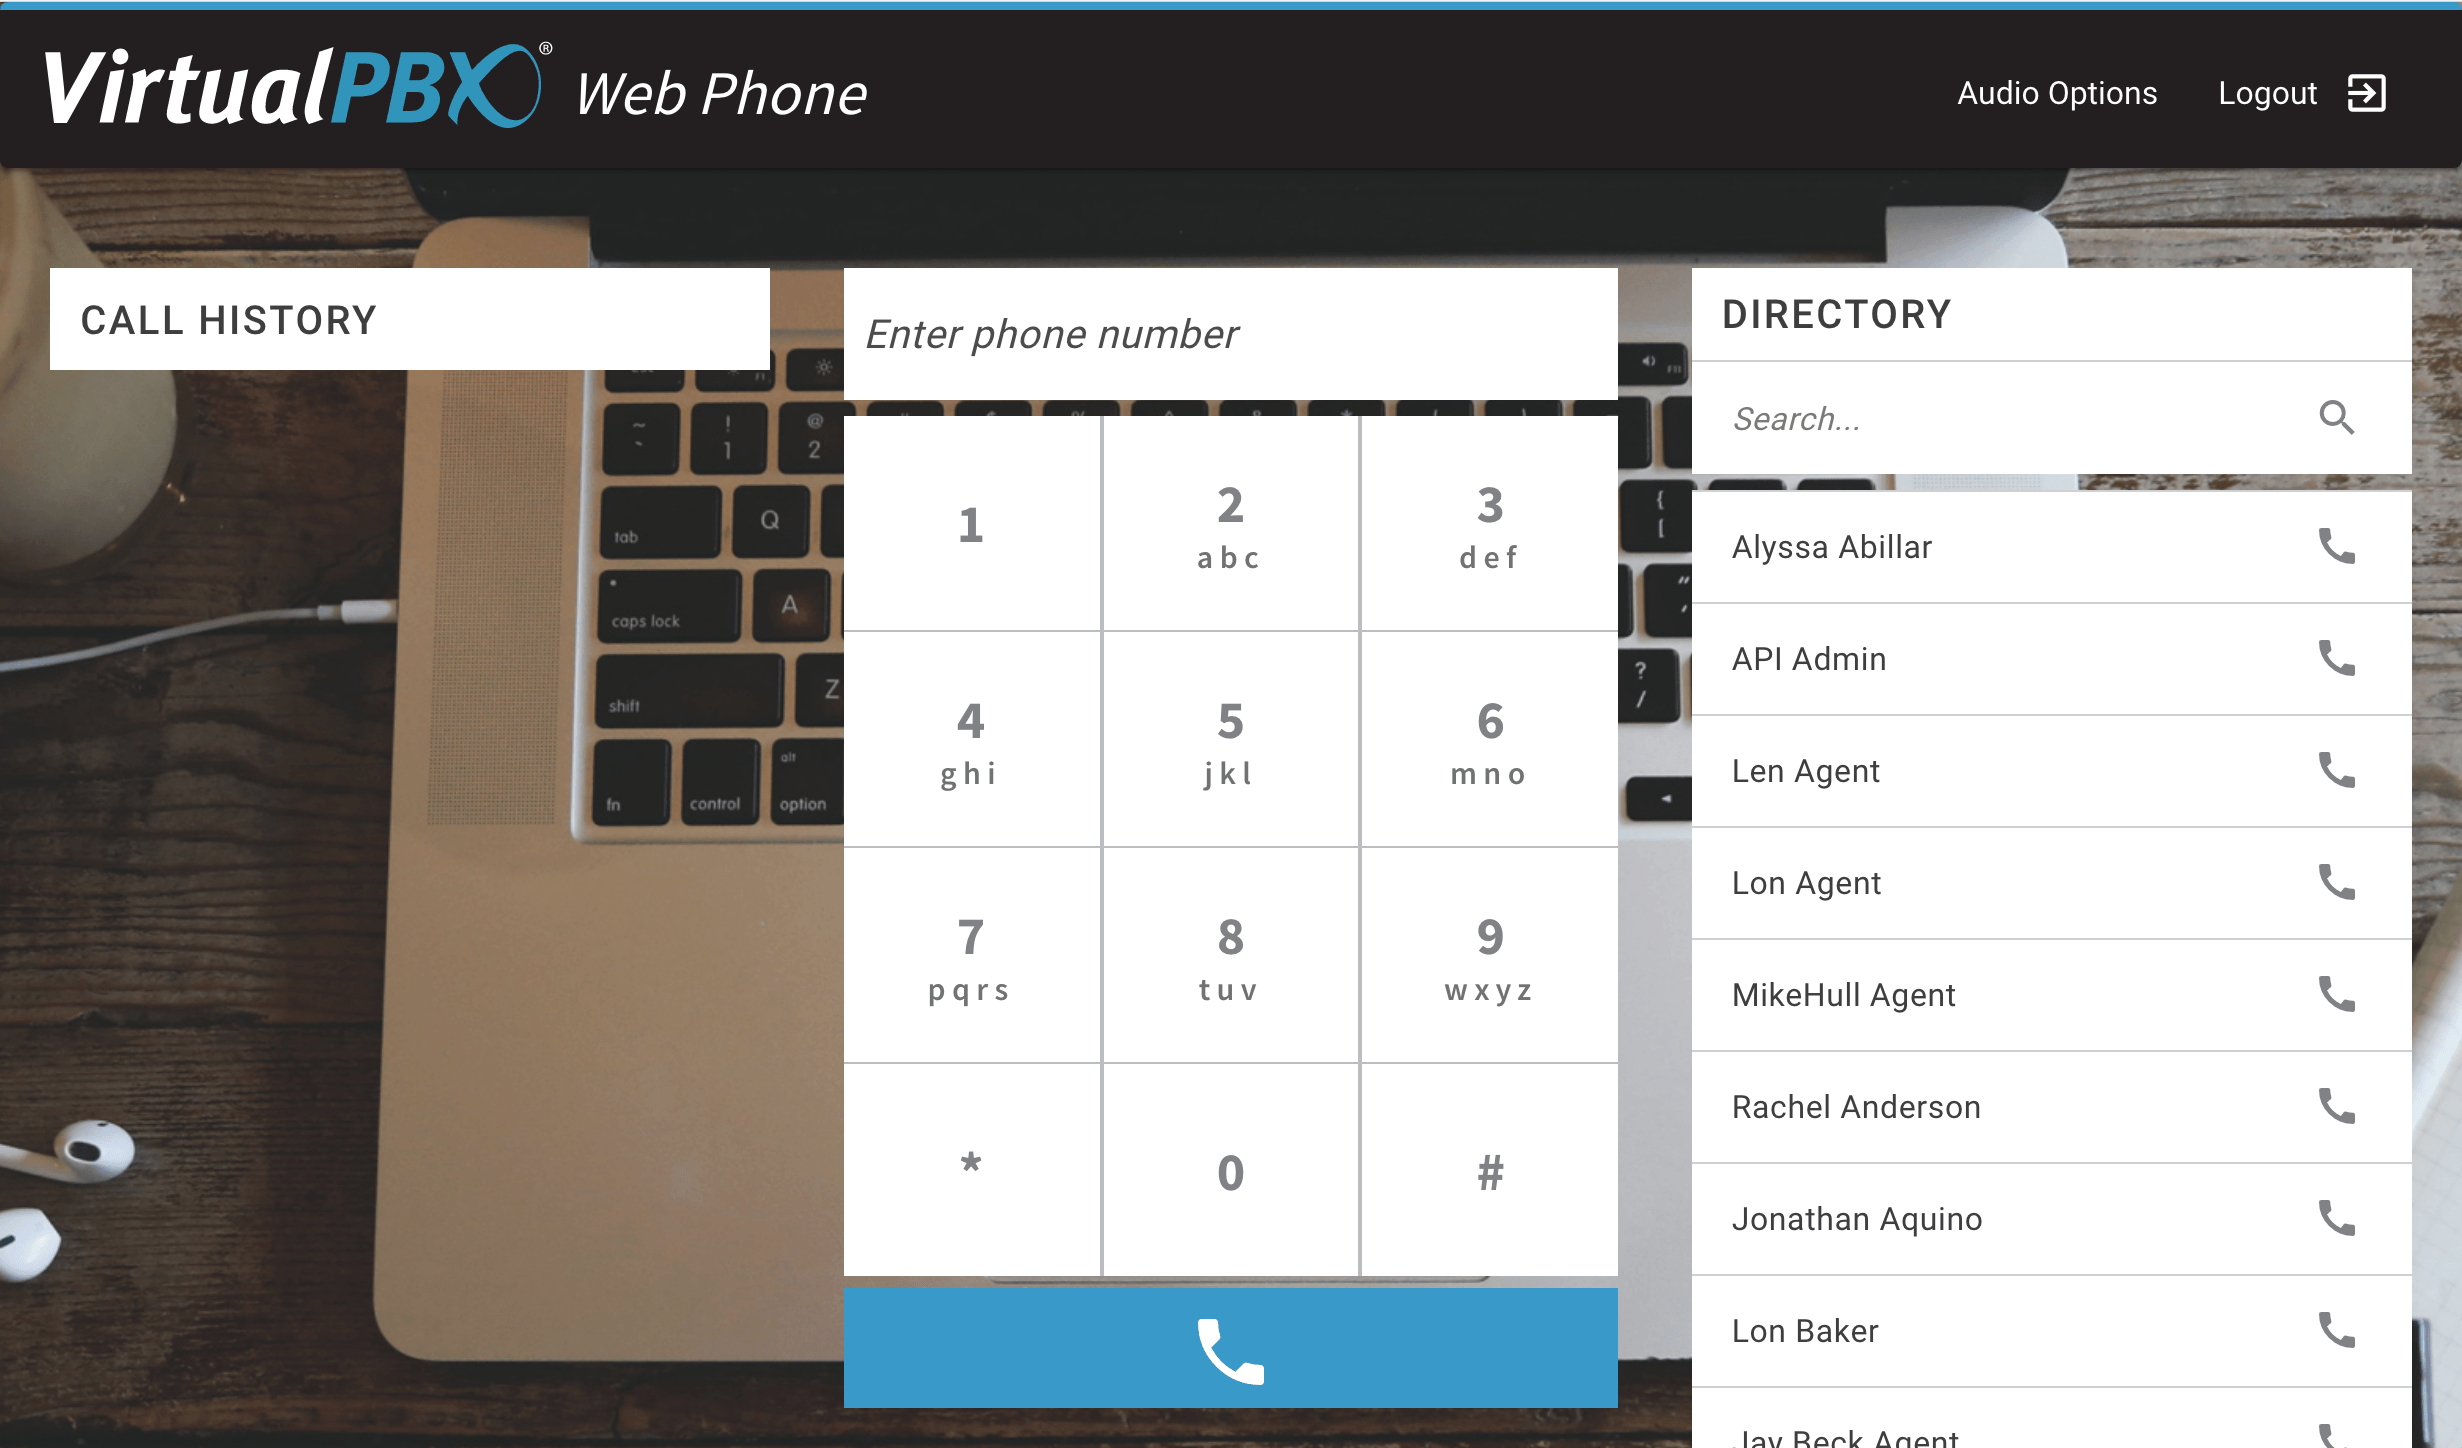 Introducing the VirtualPBX Web Phone